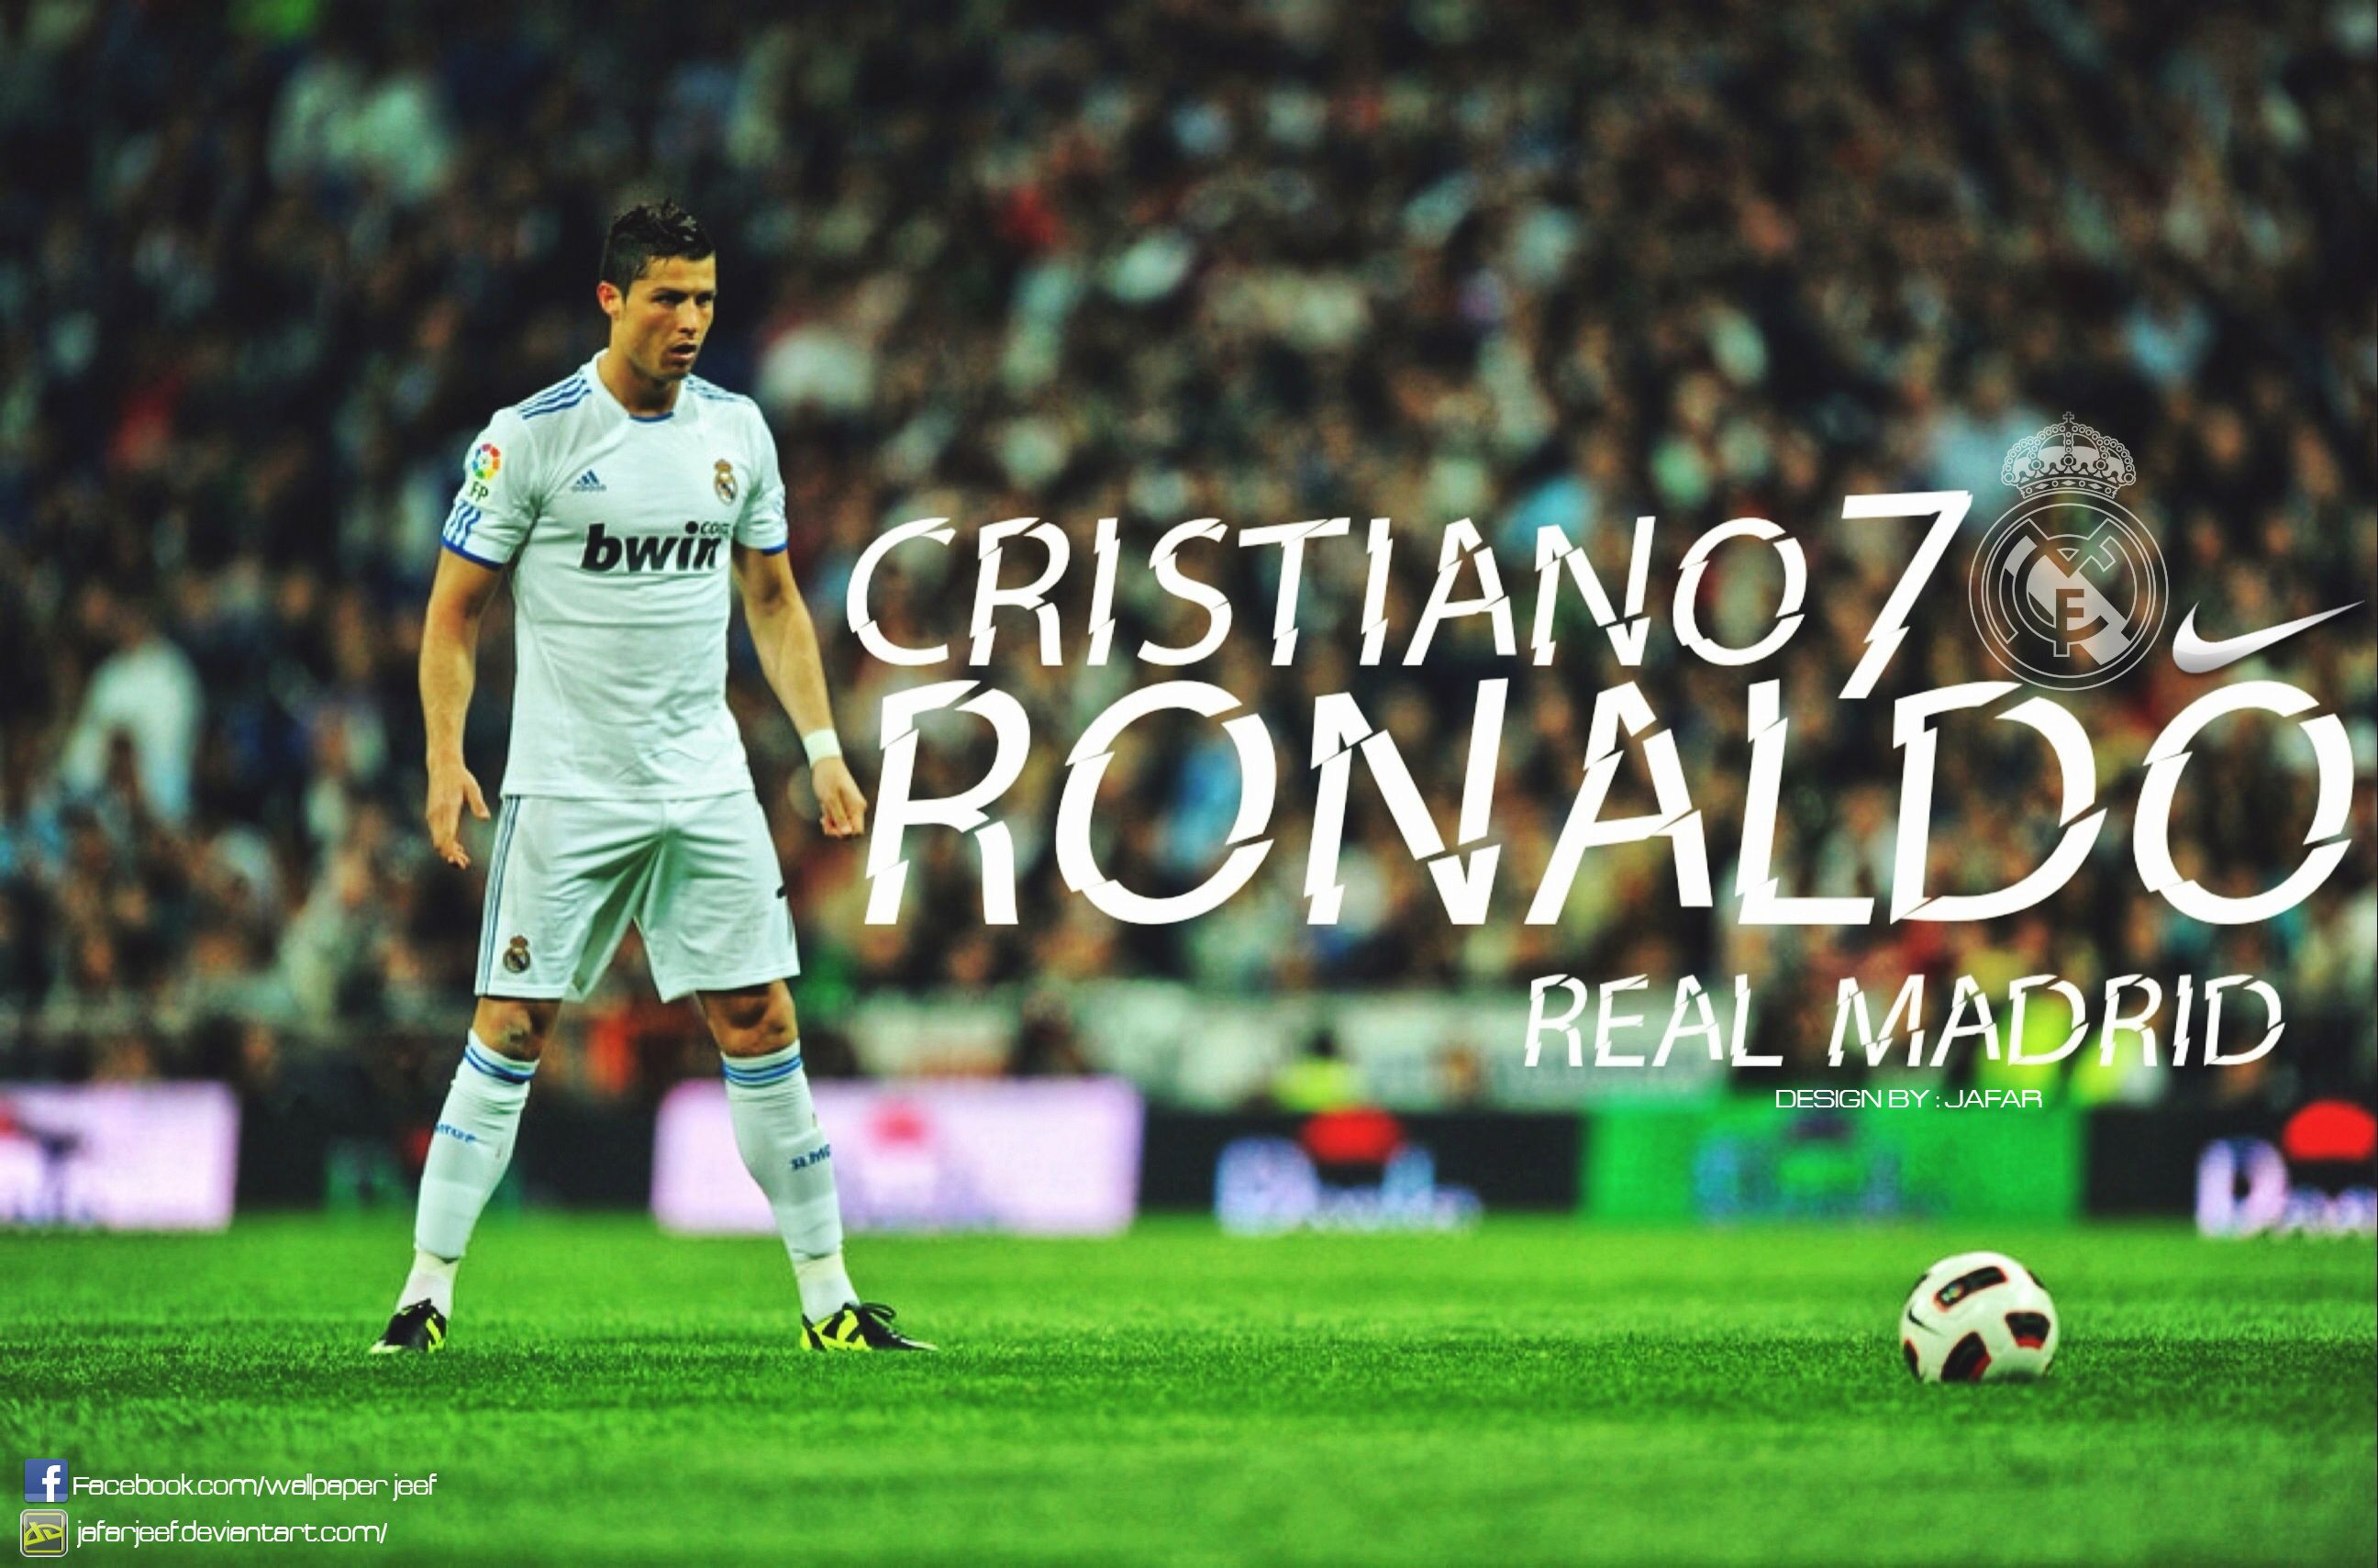 50+ Free Ronaldo & Cristiano Ronaldo Images - Pixabay